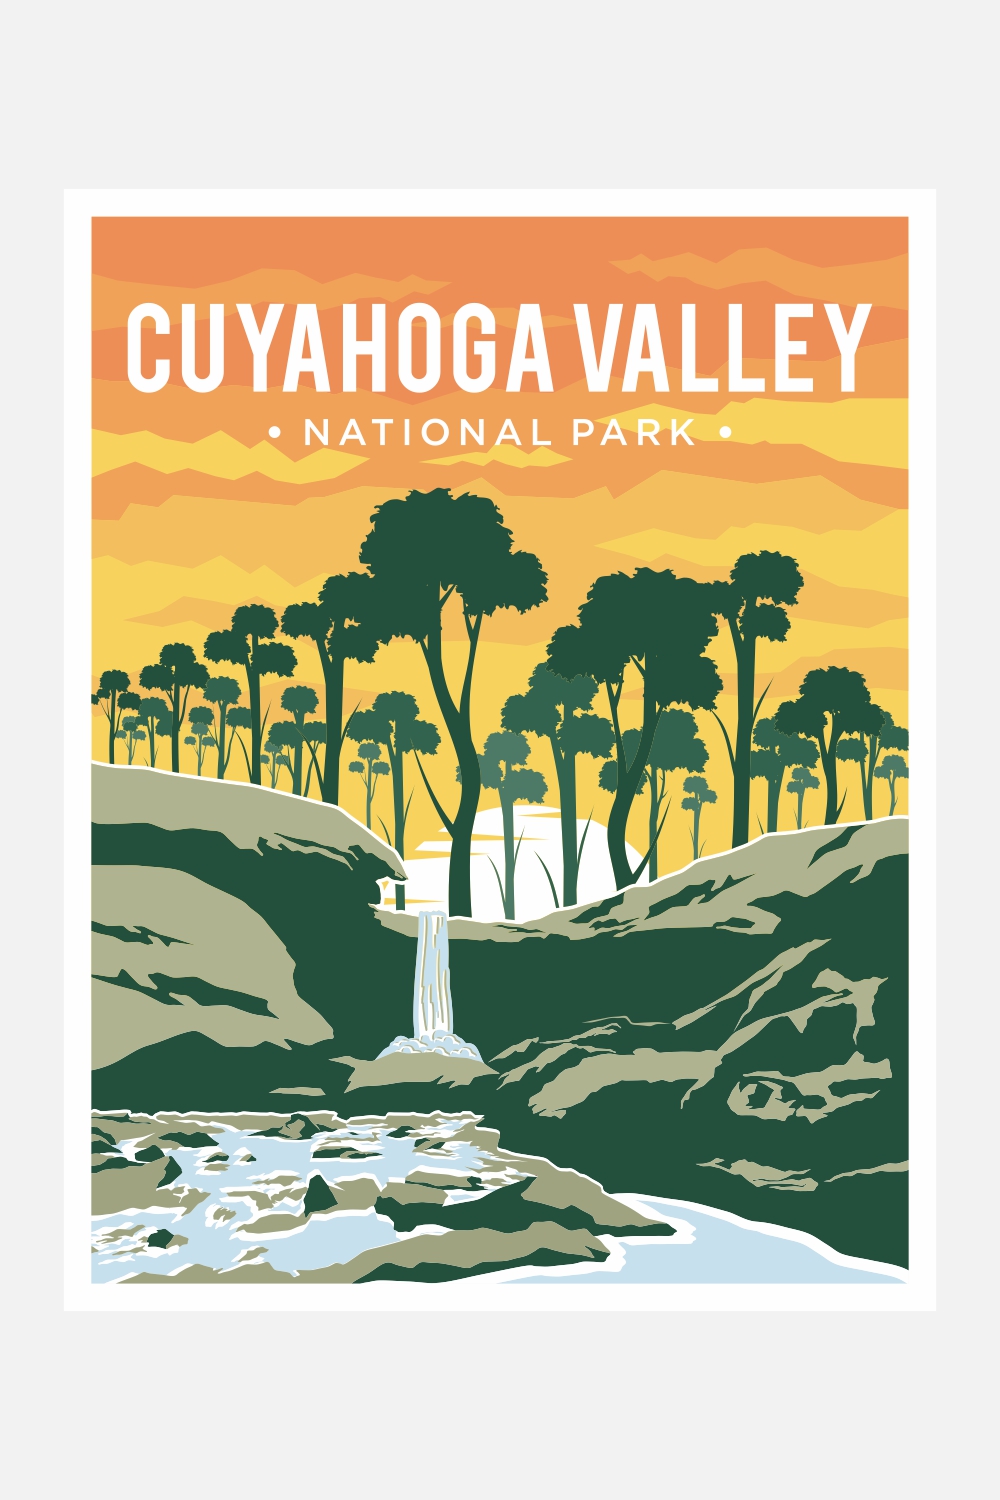 Cuyahoga Valley National Park poster vector illustration design – Only $8 pinterest preview image.